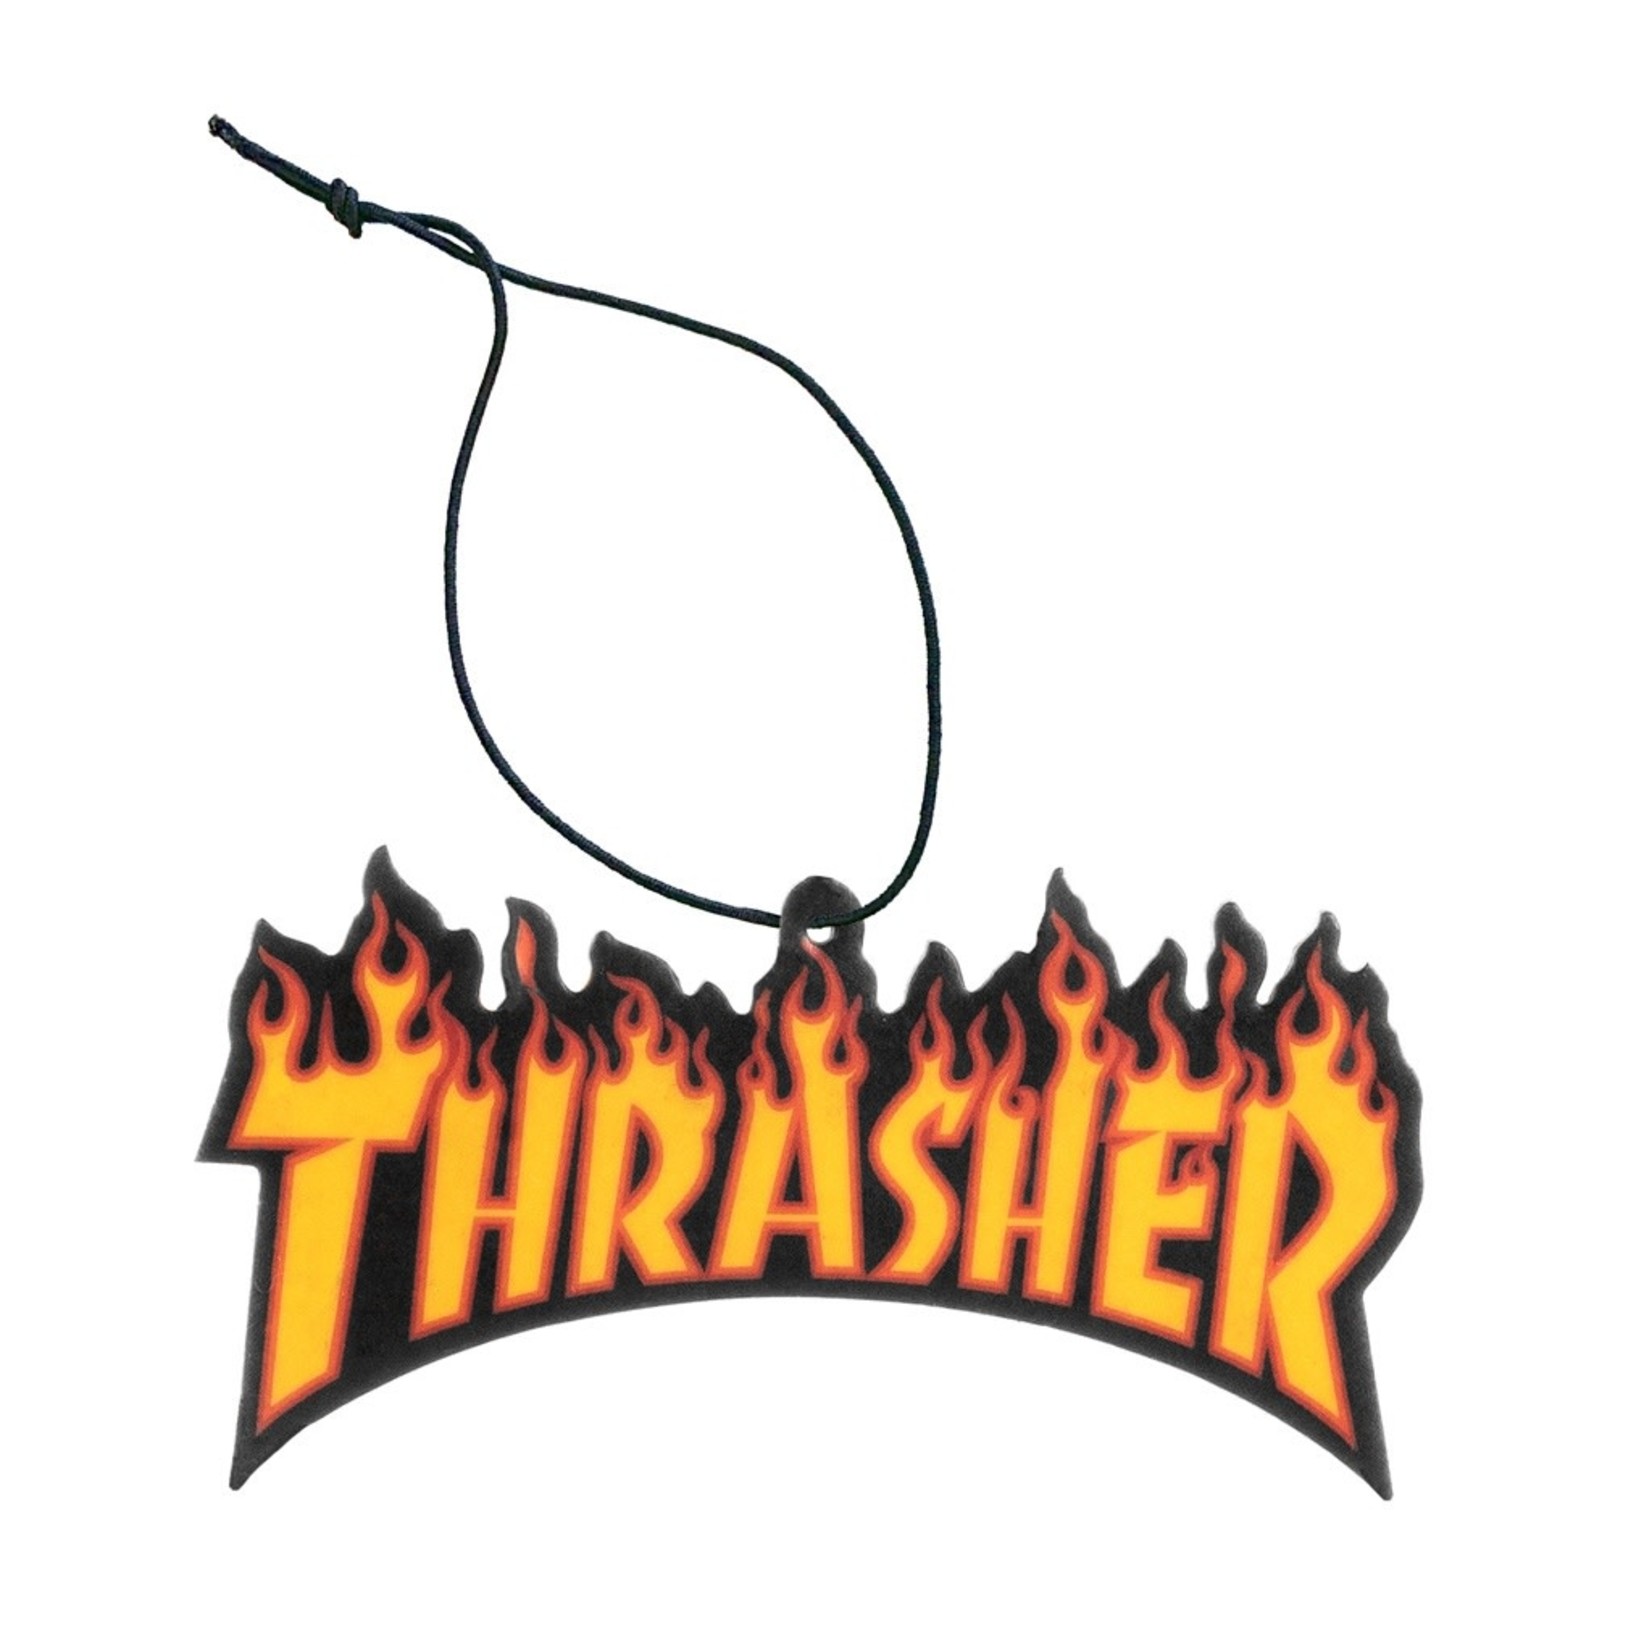 Thrasher Thrasher Flame Logo Air Freshener